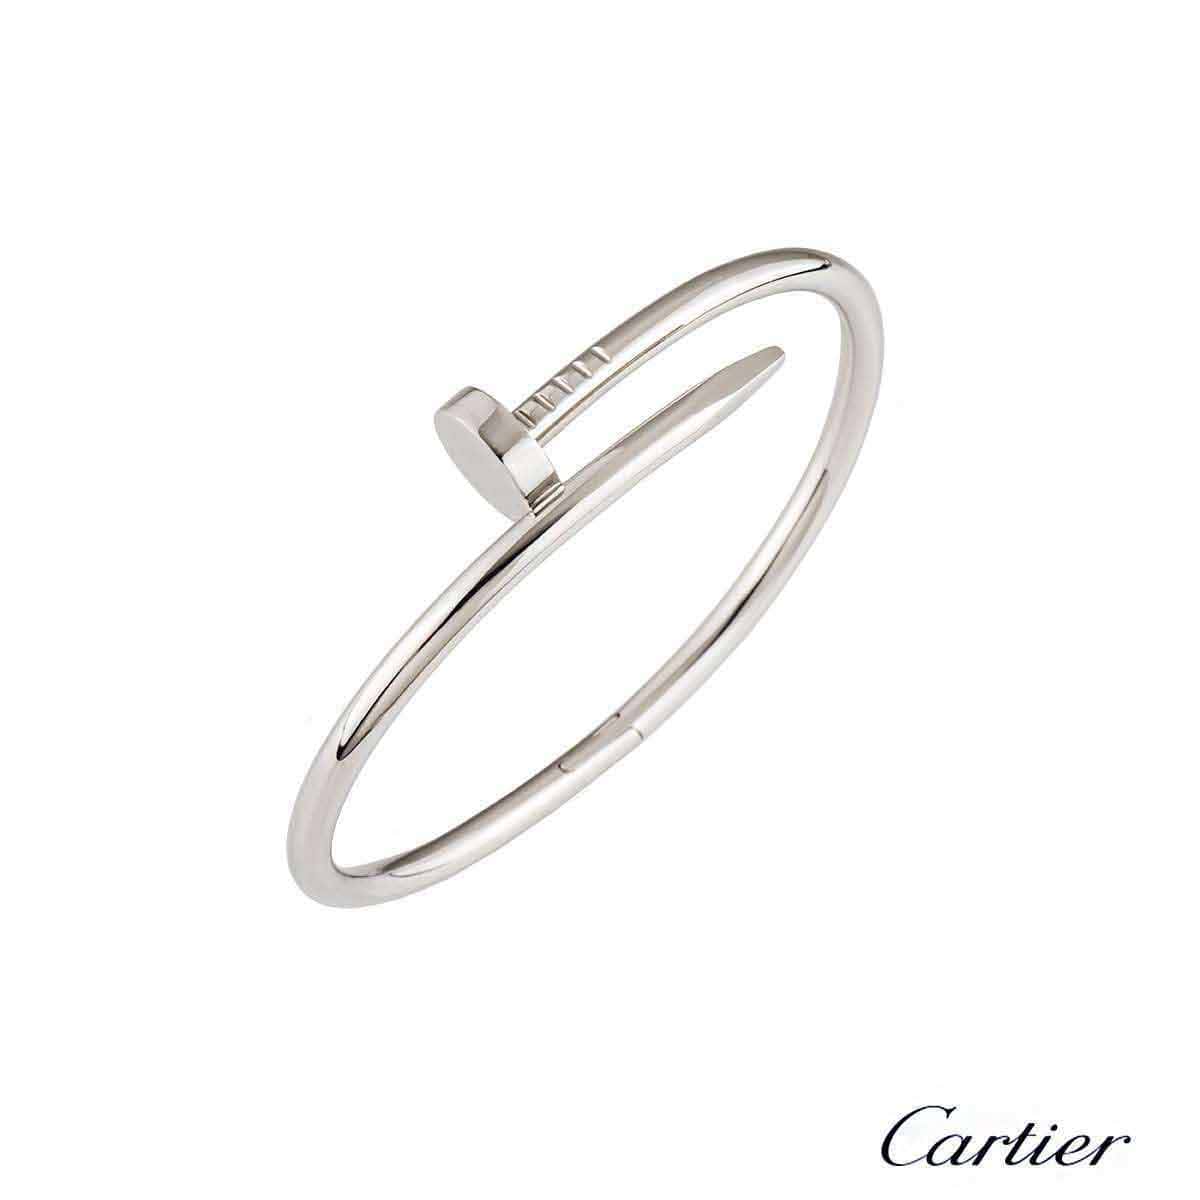 cartier bracelet silver nail price